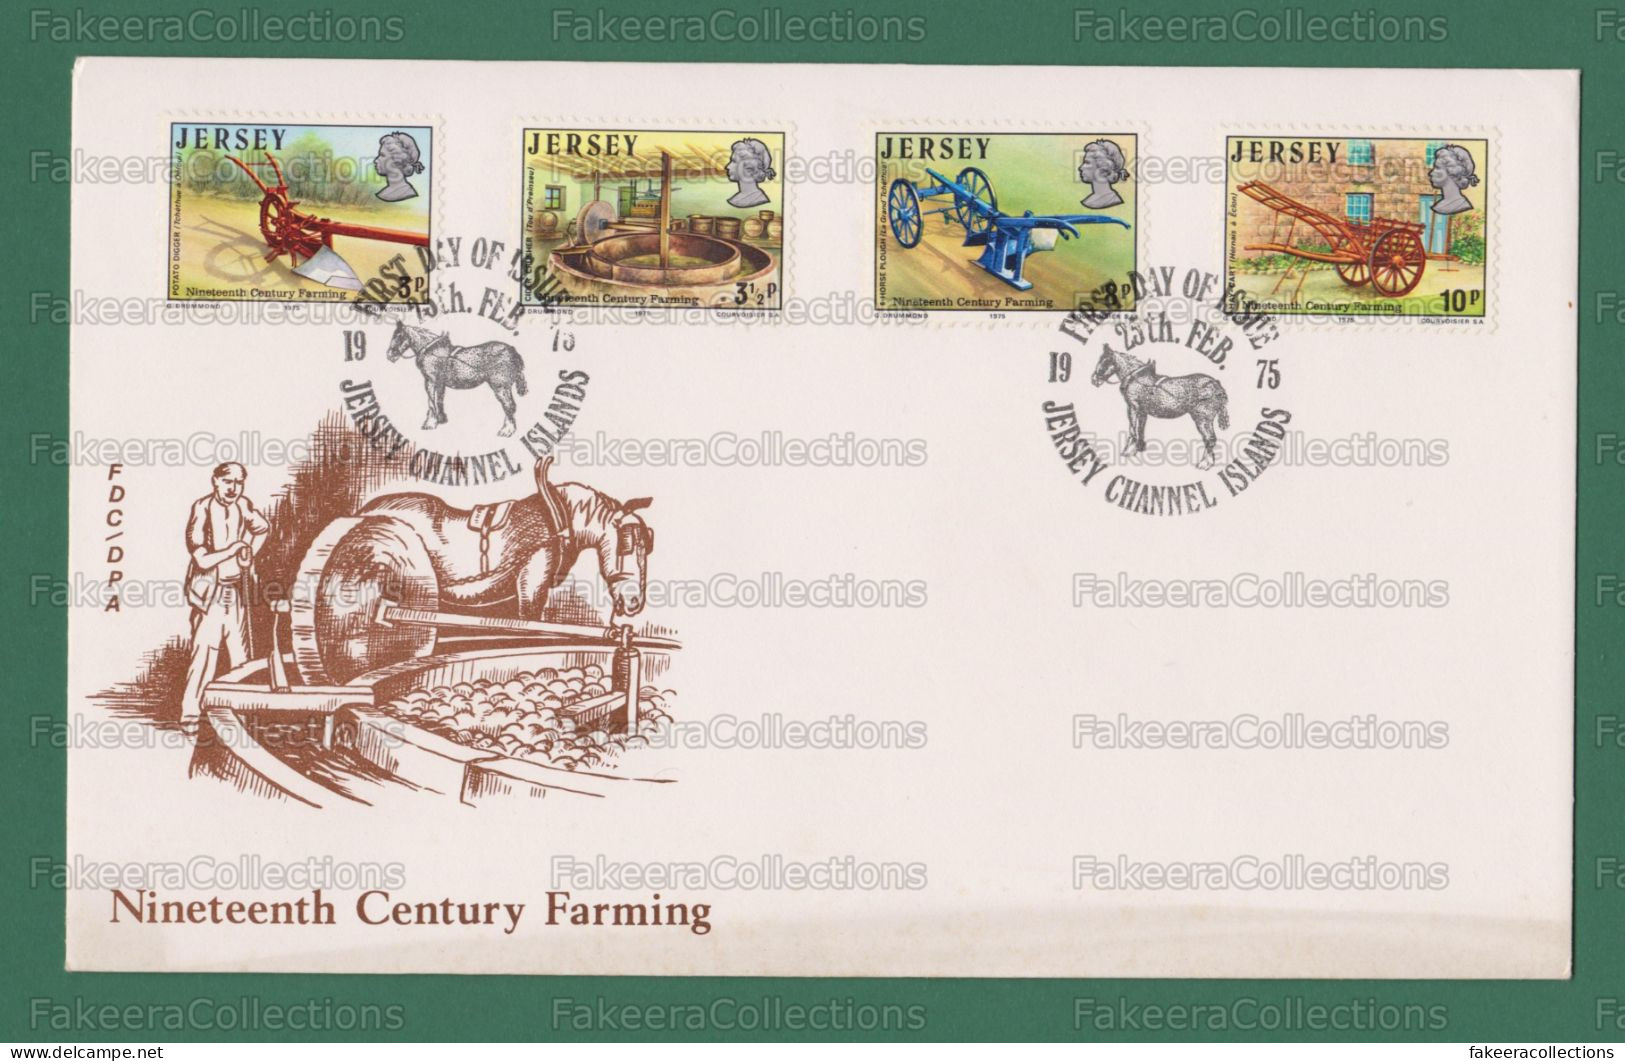 JERSEY 1975 - 19th CENTURY FARMING 4v FDC - Horse, Horses, Farm Tools, Cart, Digger, Crusher, Plough, Carts - Horses